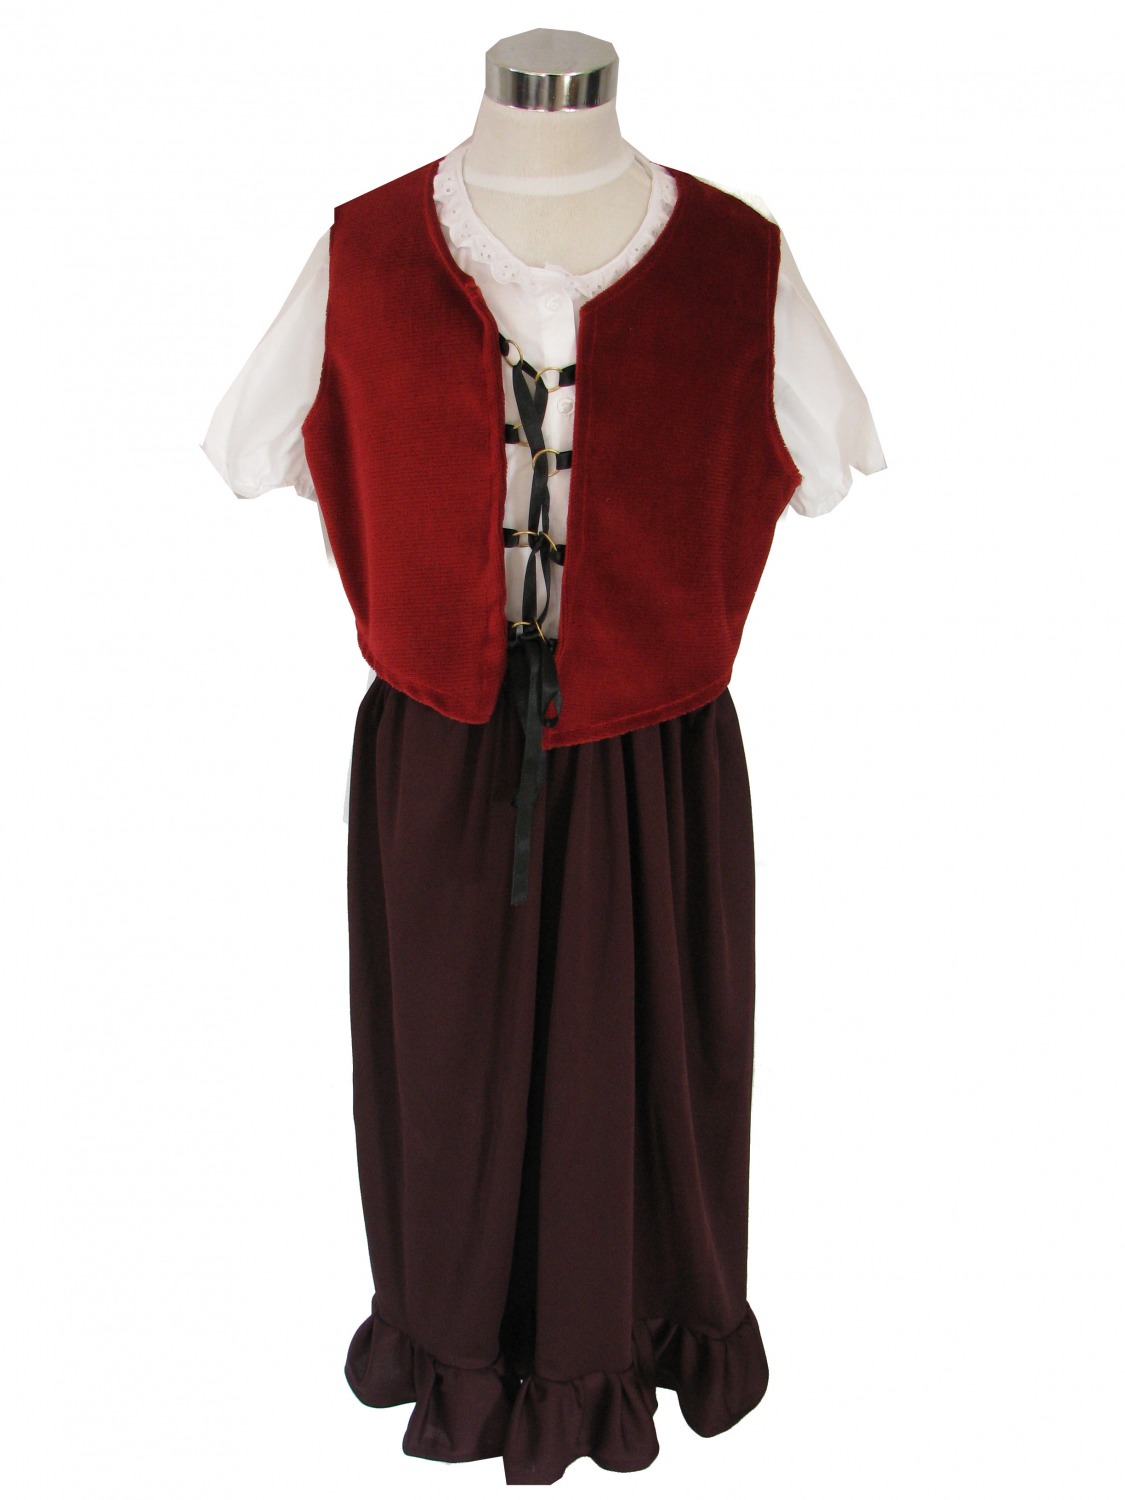 Girls Medieval Tudor Fancy Dress Costume Age 7 - 9 Years Image